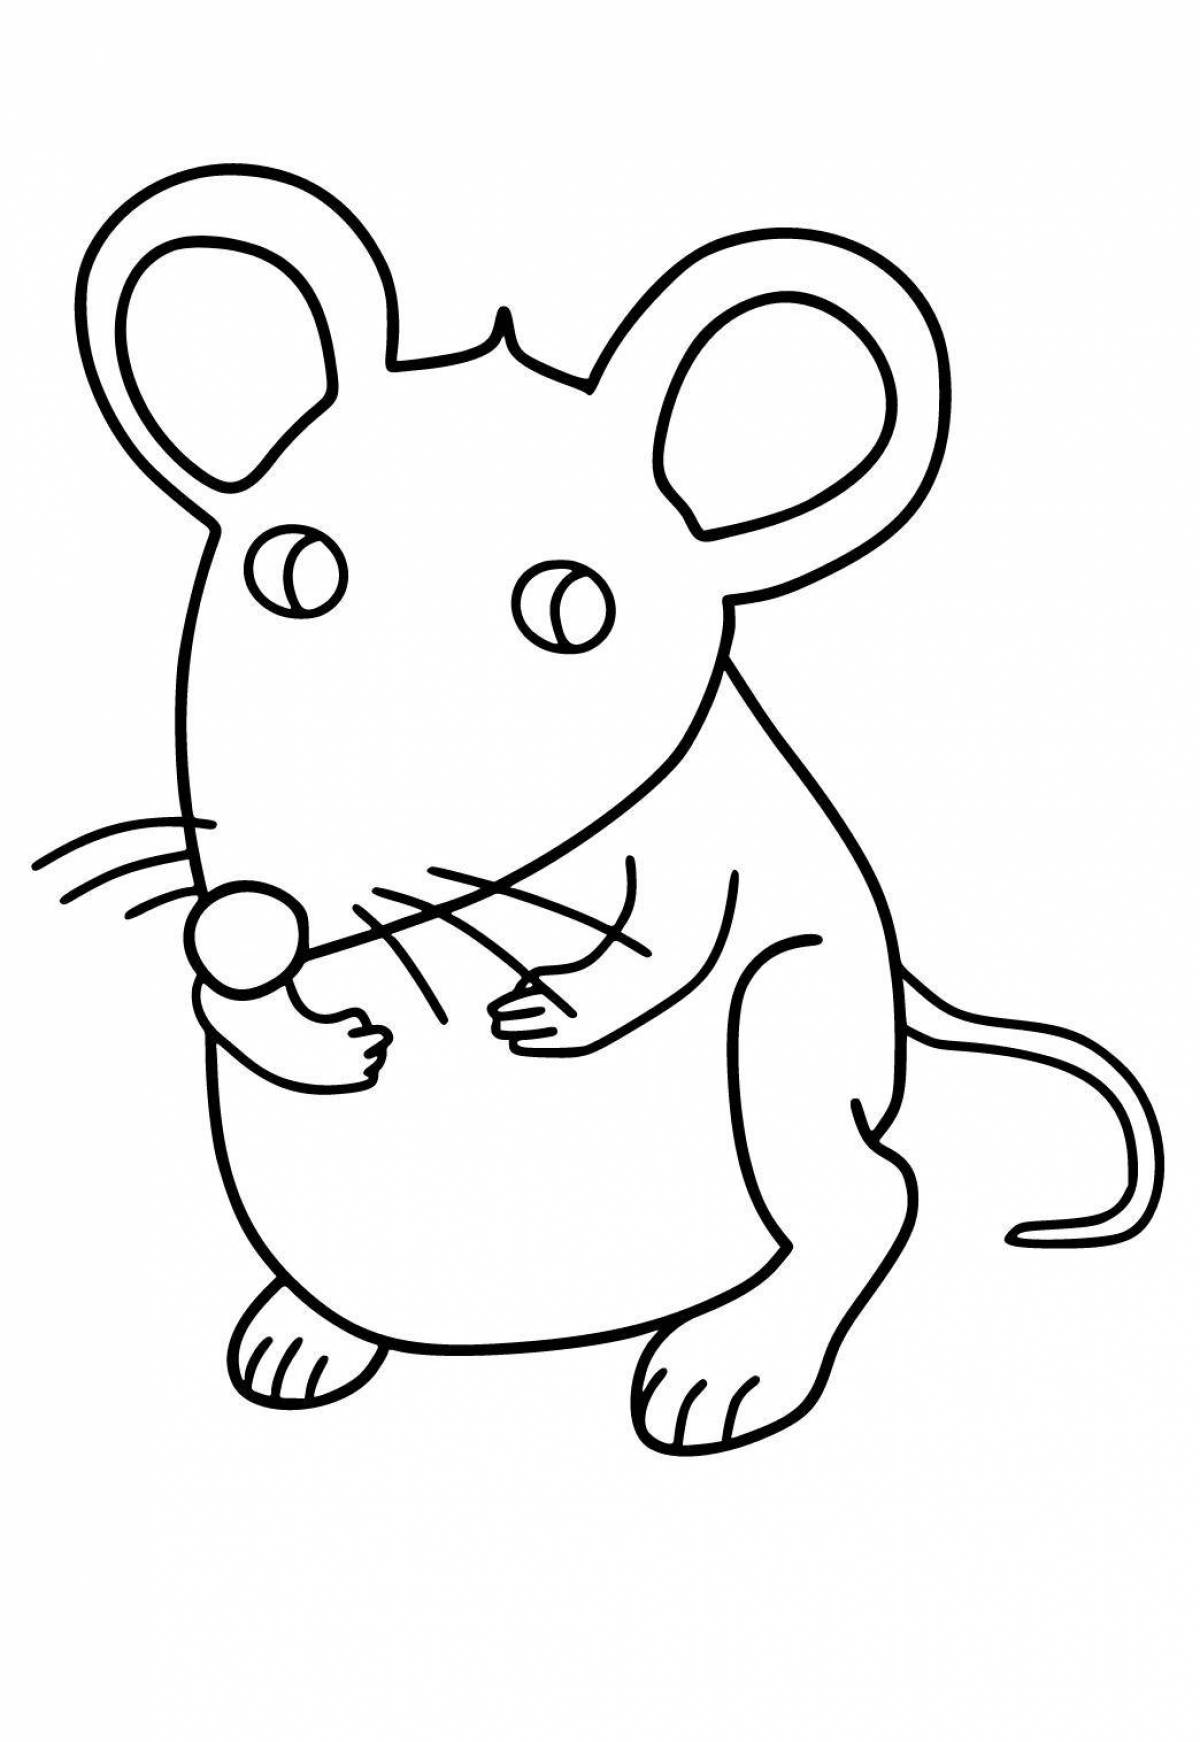 Увлекательная раскраска мышь норушка